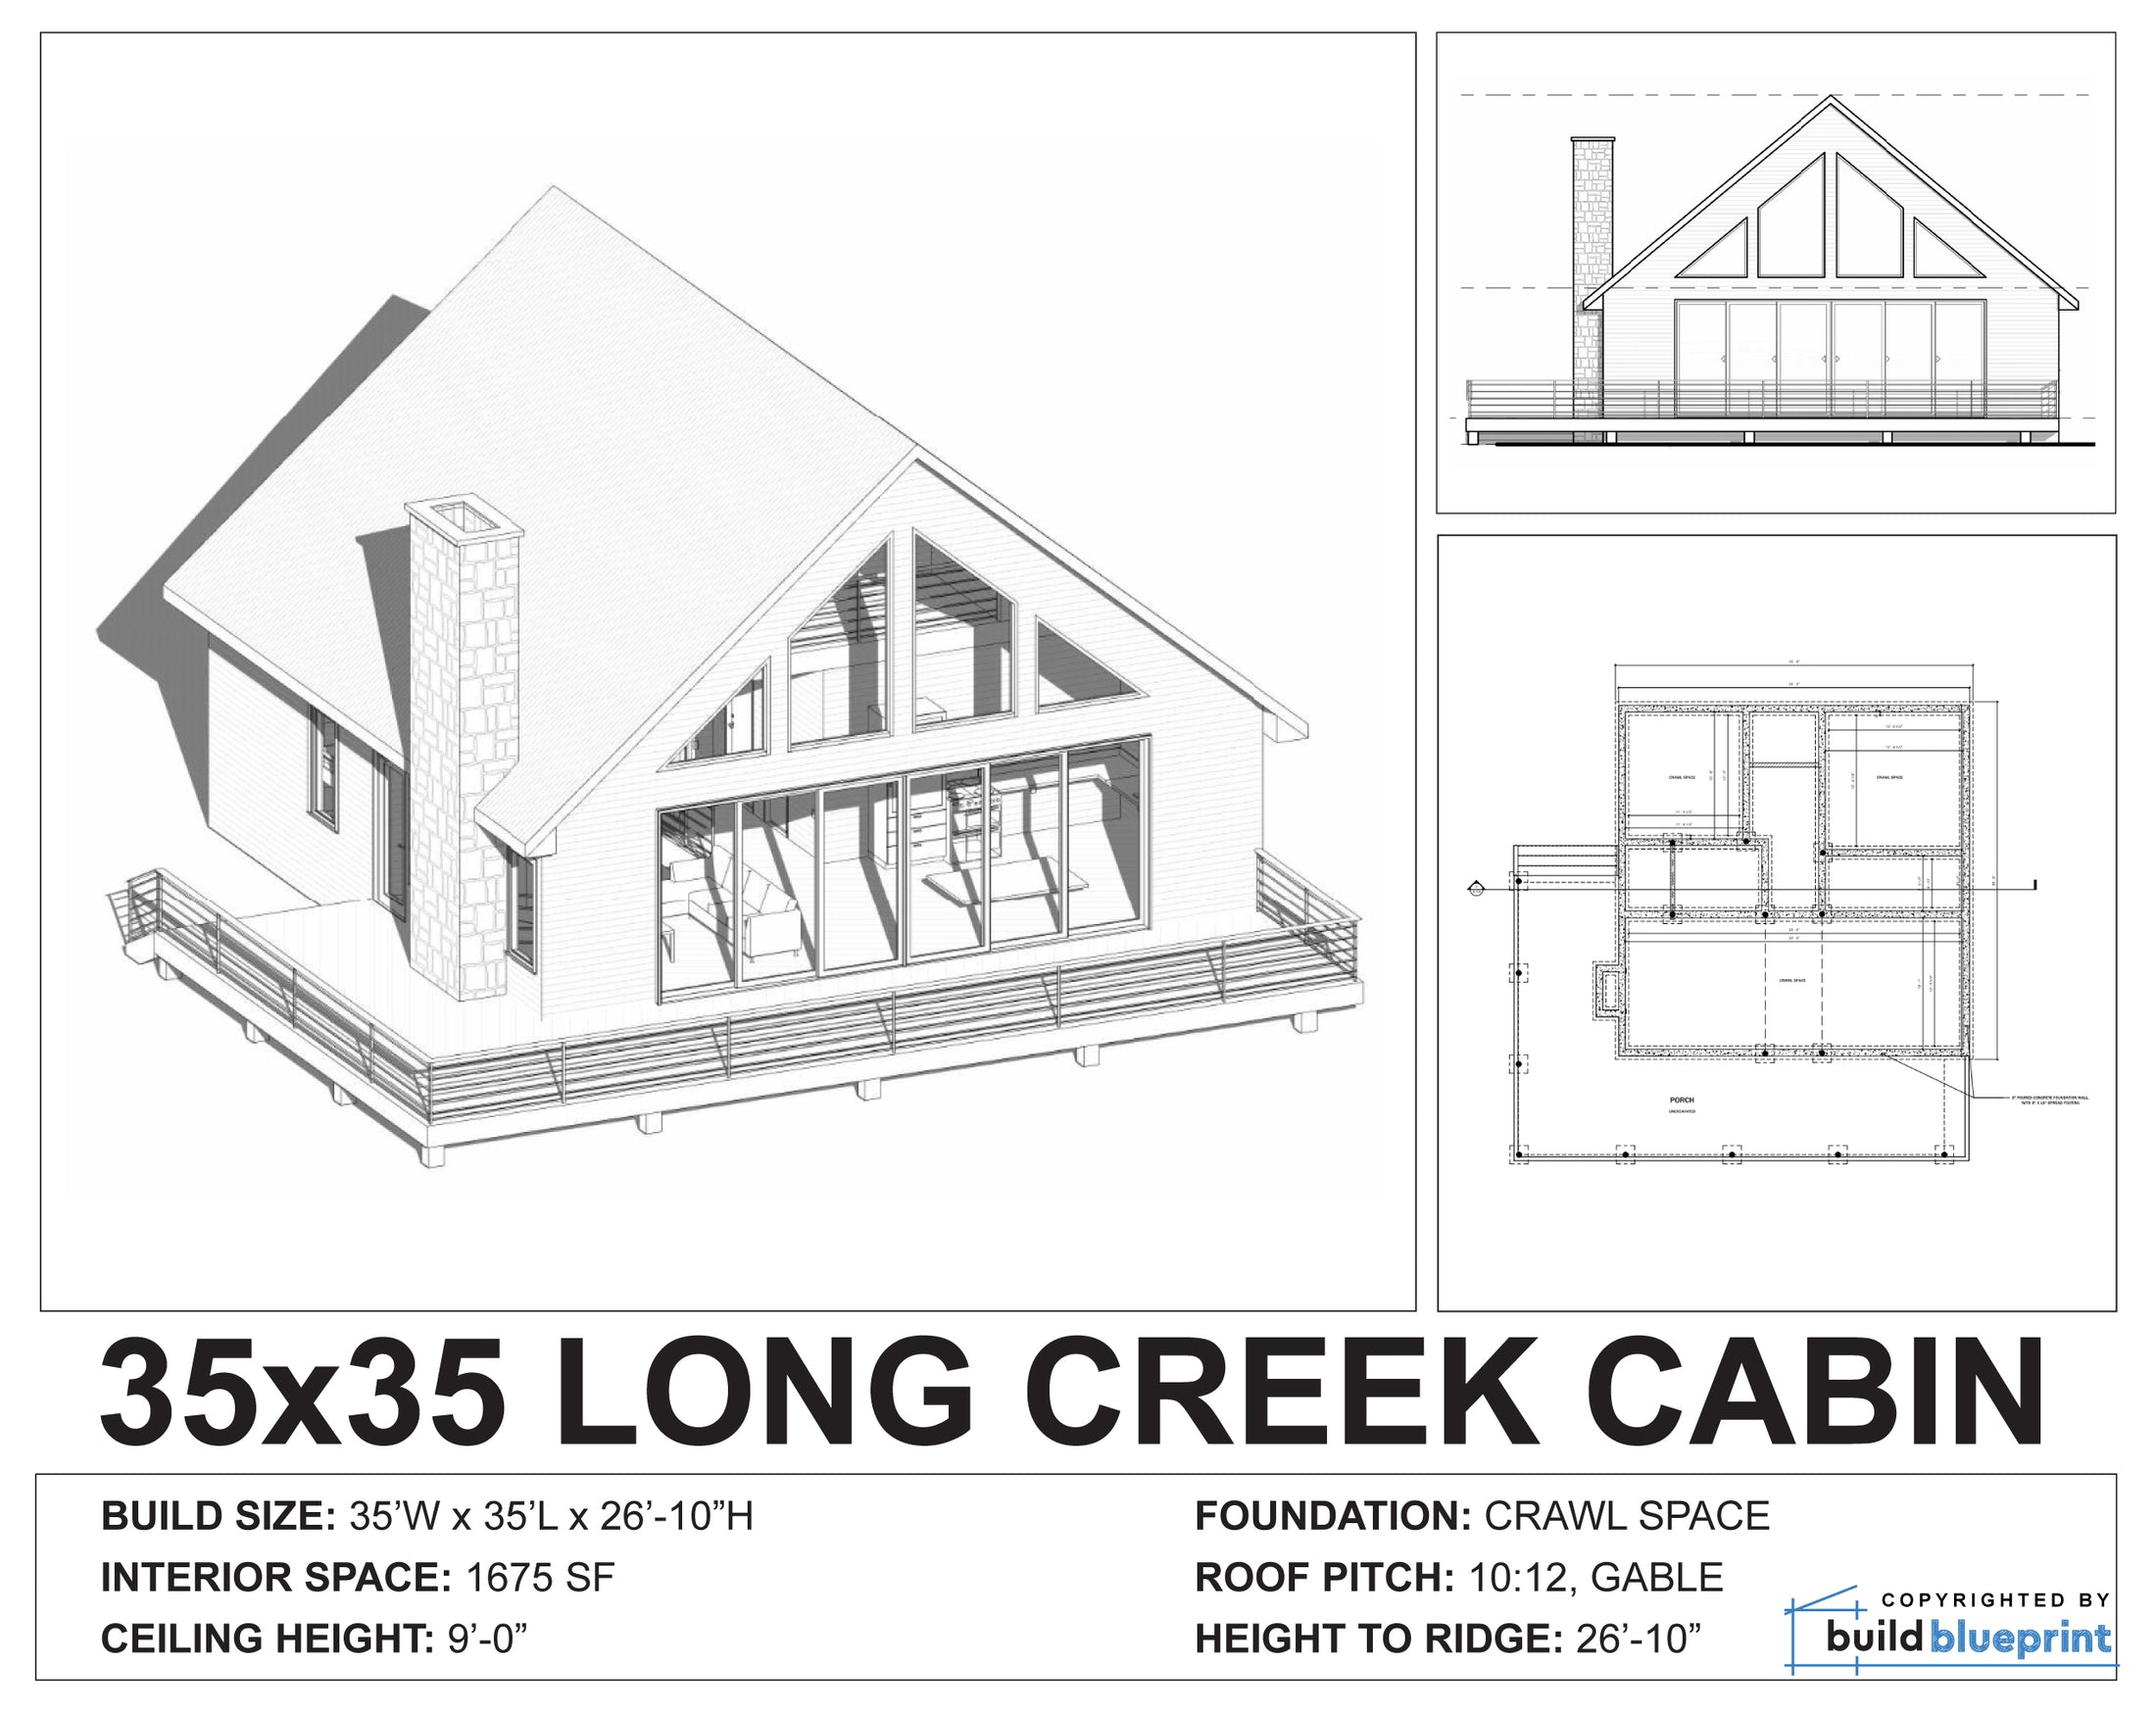 35' x 35' Long Creek Modern Cabin Architectural Plans – Build Blueprint